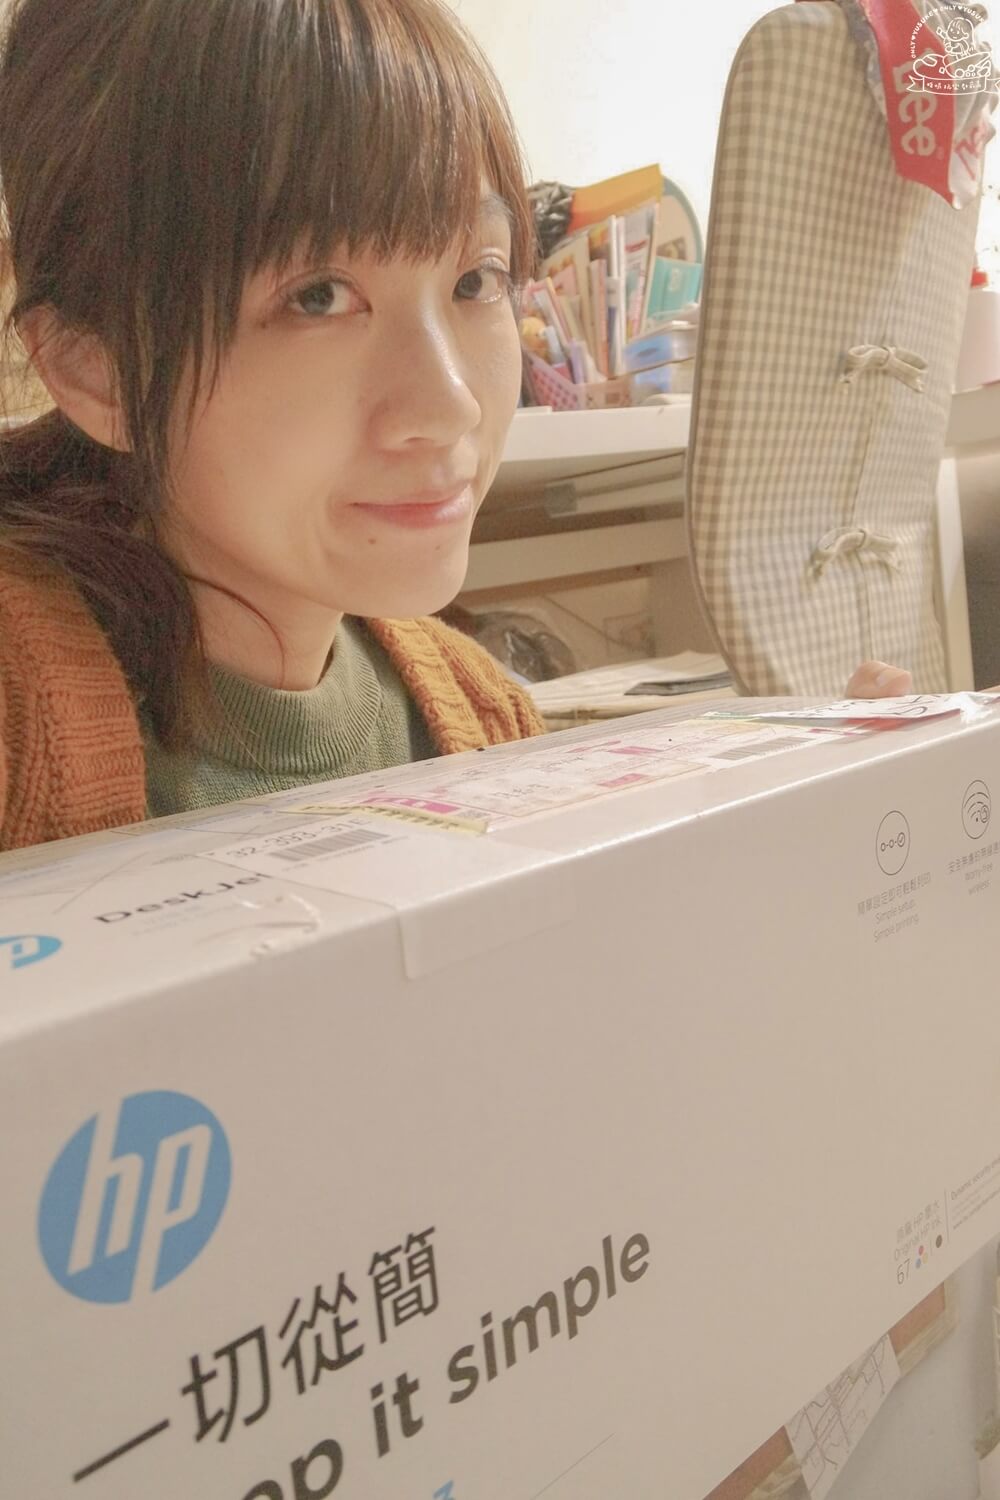 HP DeskJet 2723 多合一印表機開箱
